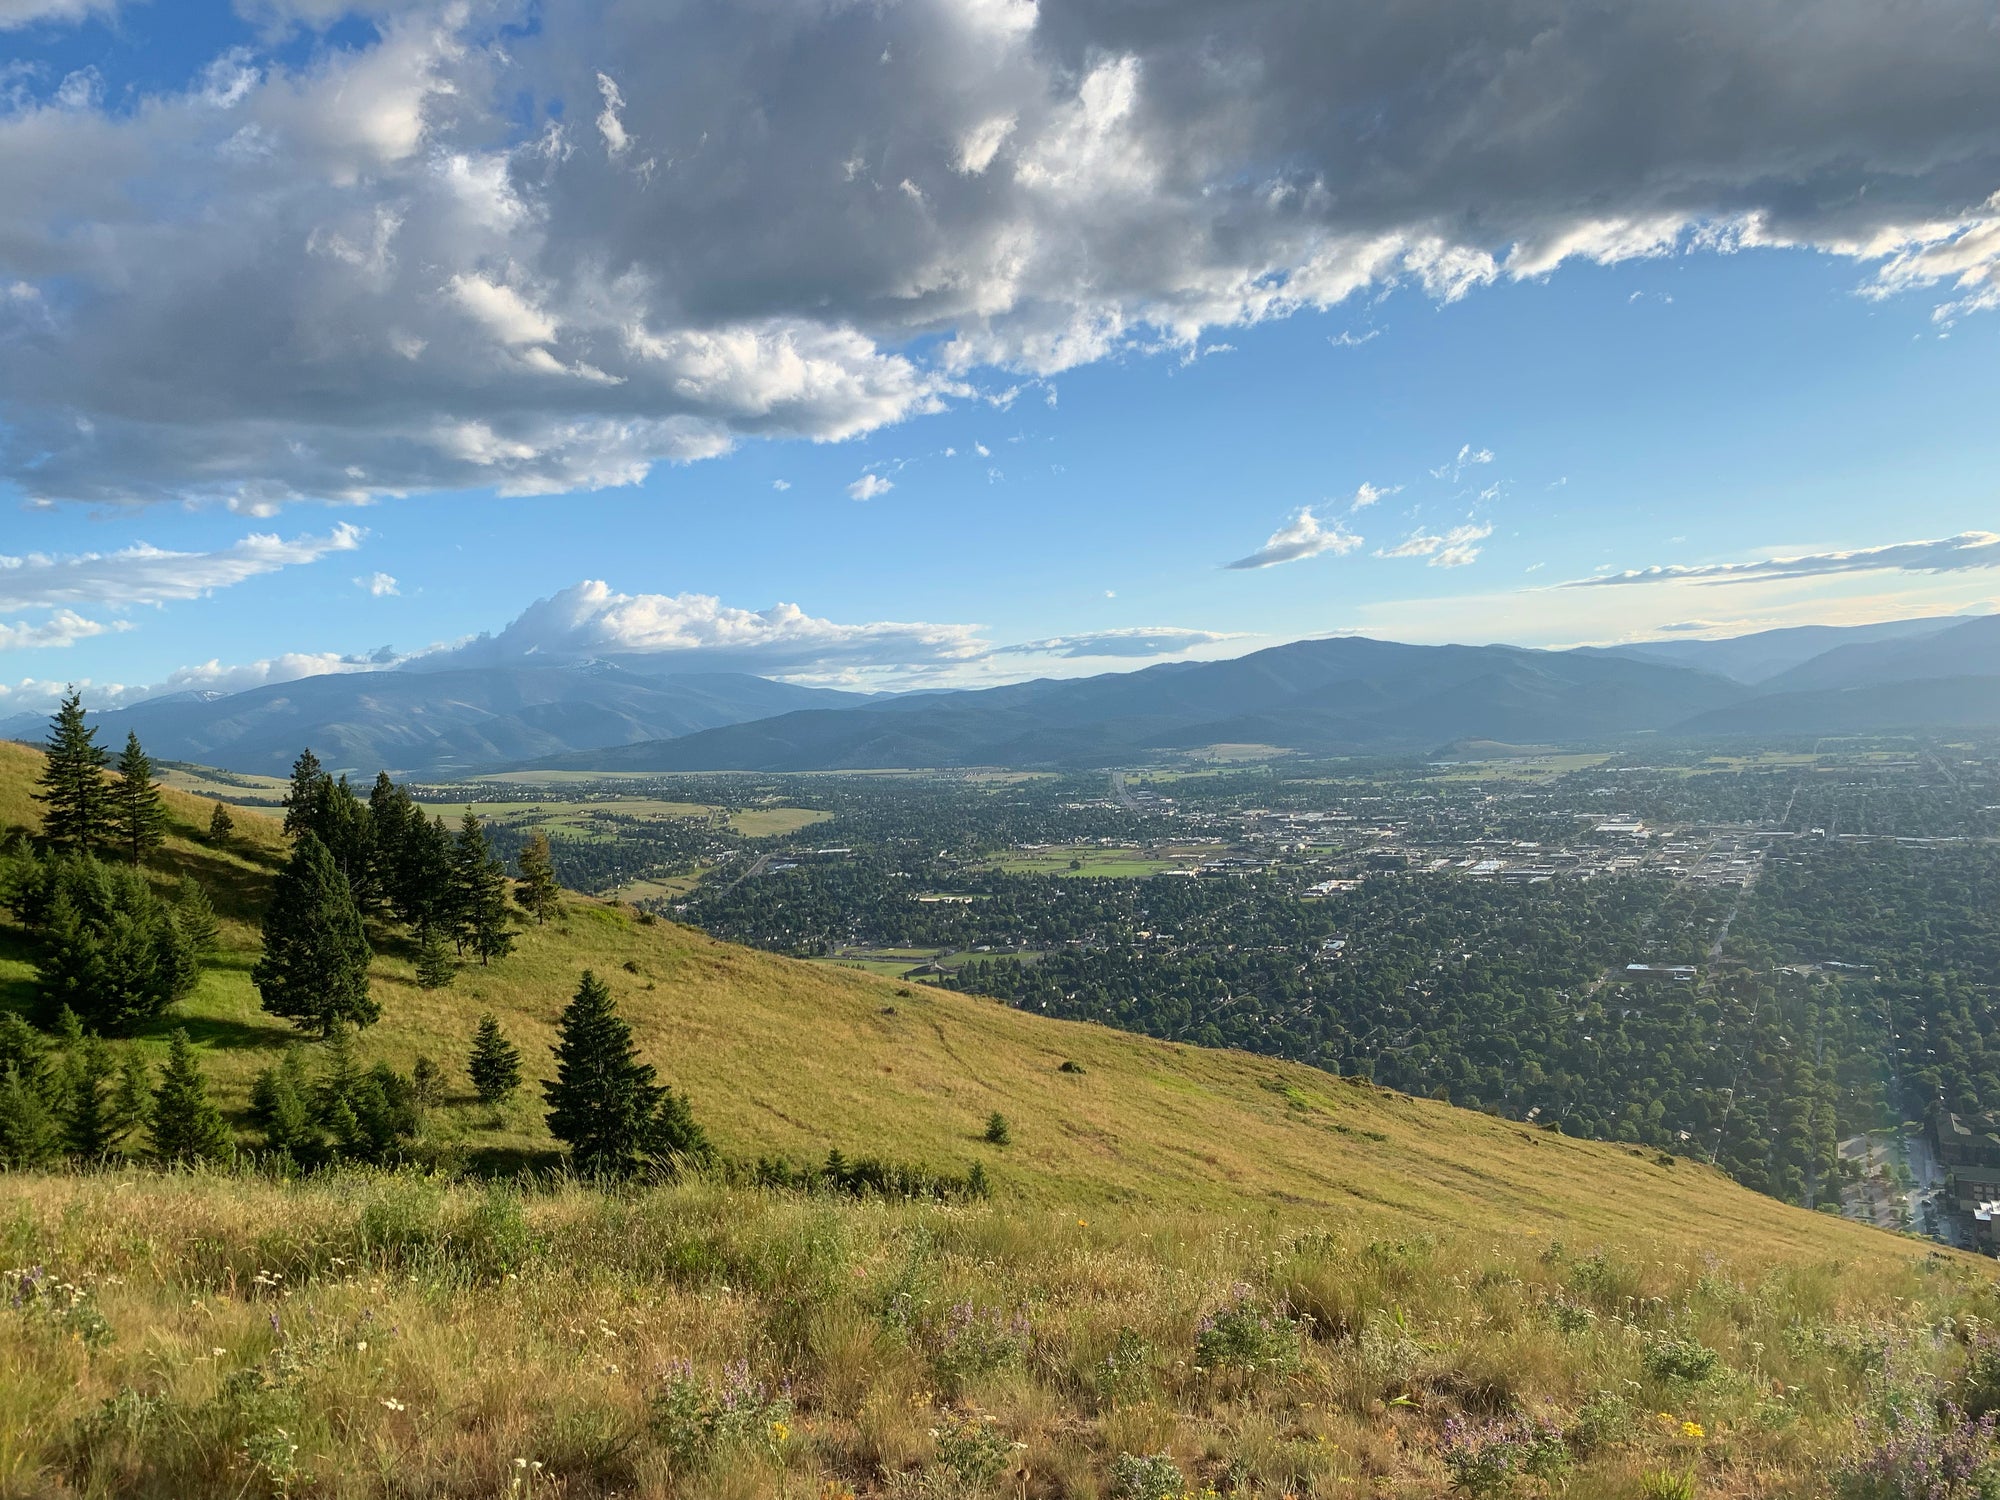 Missoula, Montana in July as seen from Mount Sentinel